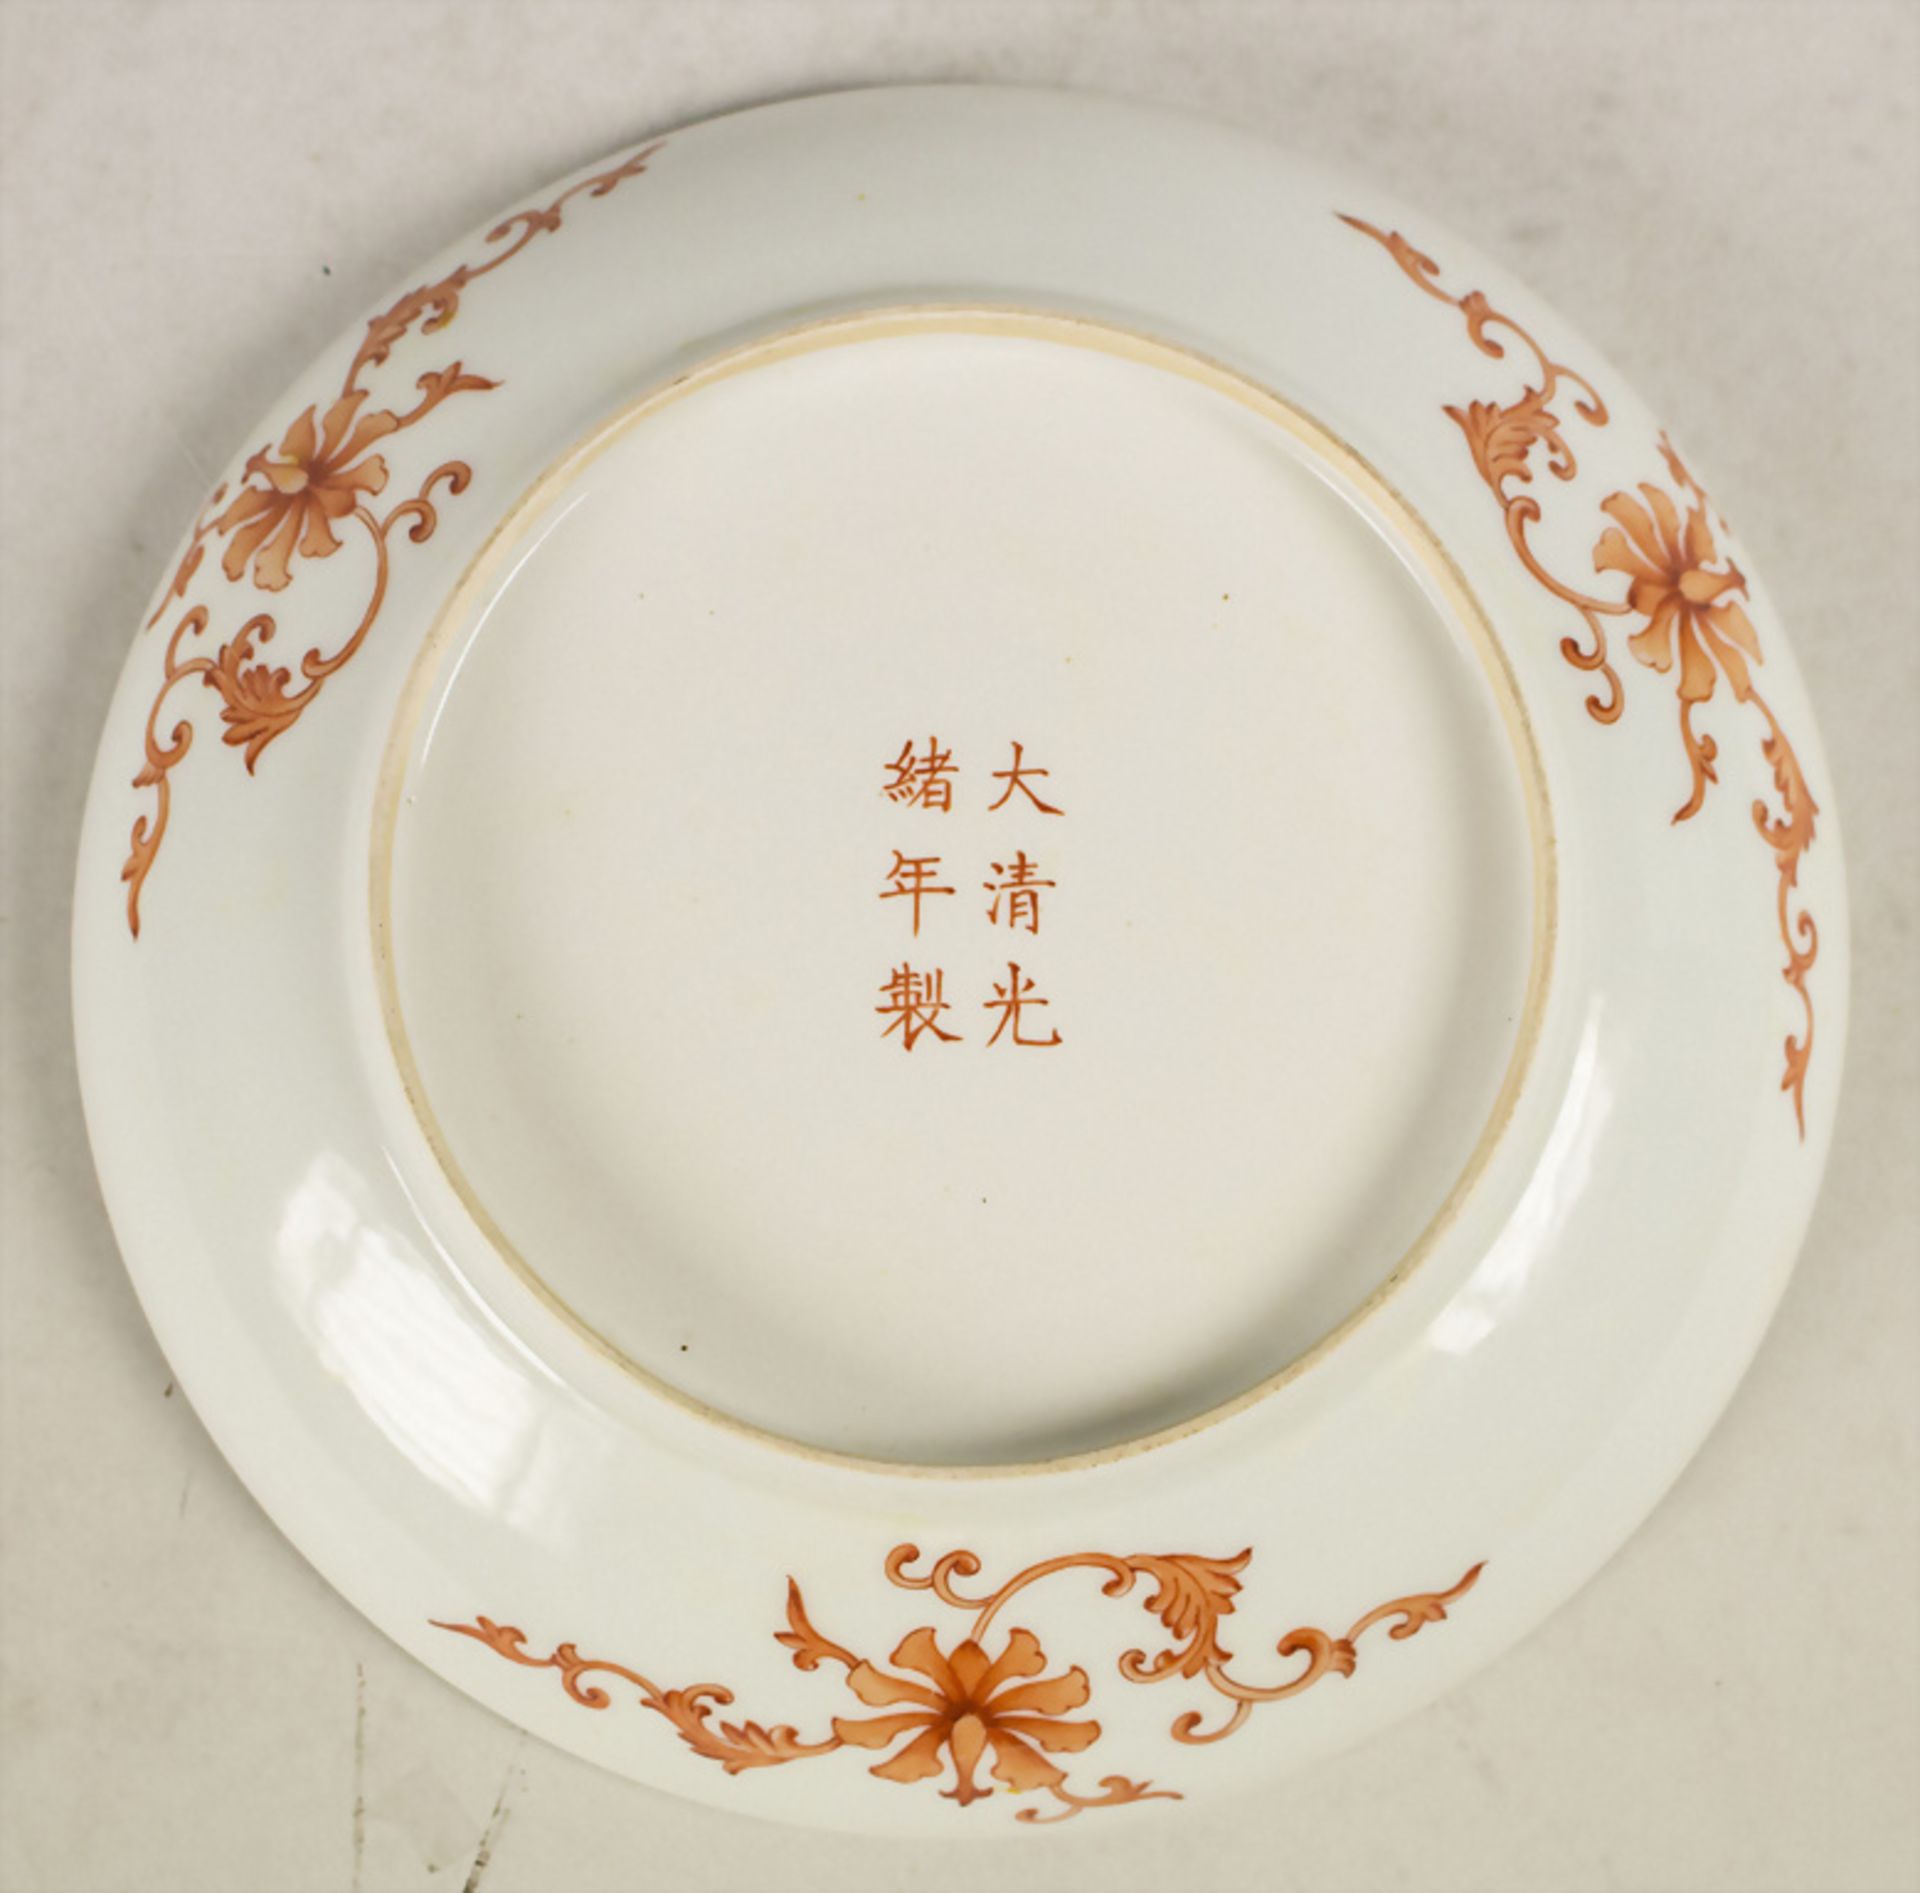 Teller mit rotem Drachen und goldener Scheibe, China, Daqing Guangxu Nianzhi Periode - Image 2 of 3